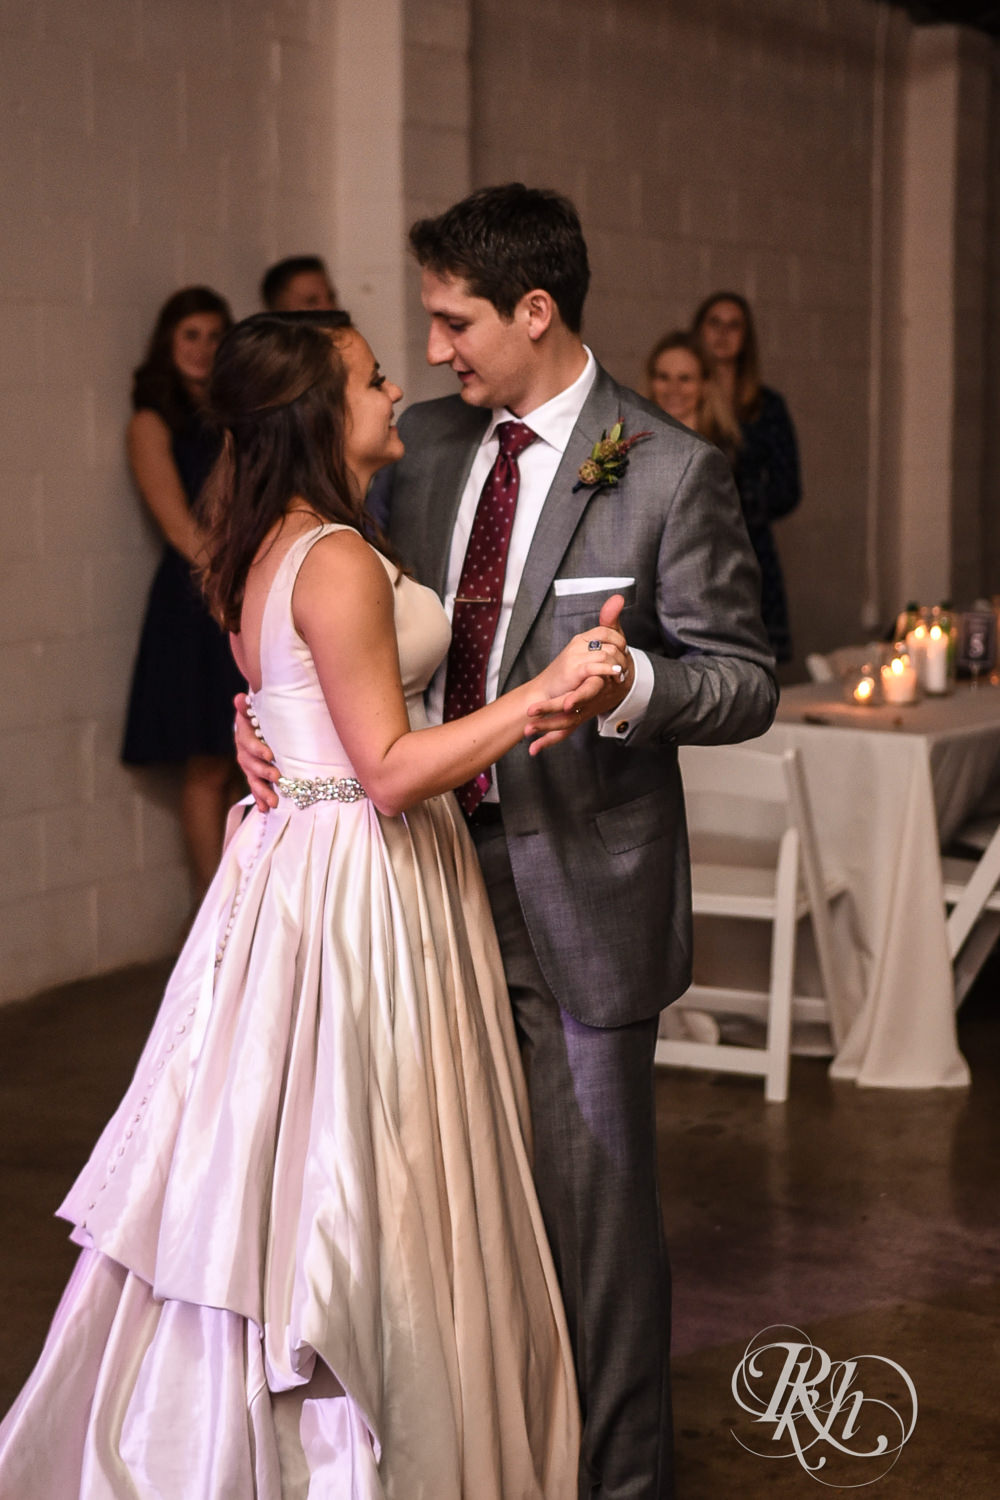 Bride and groom dance during wedding reception speeches at Paikka in Saint Paul, Minnesota.